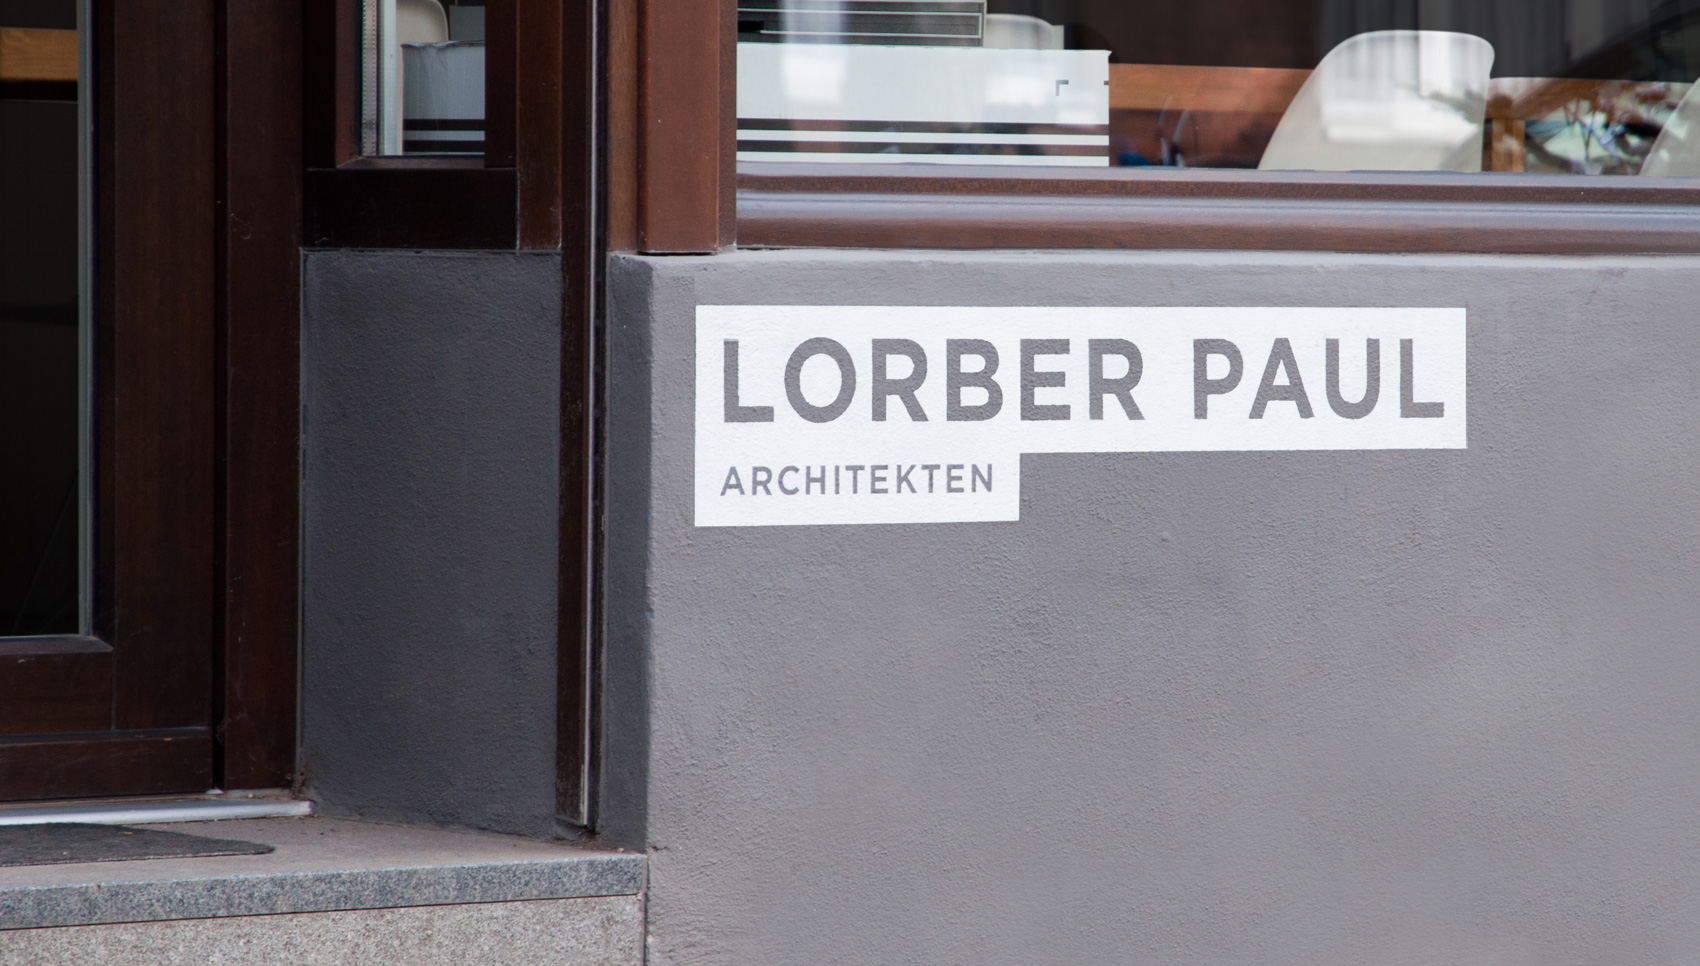 Lorber Paul Architekten. Corporate Design.